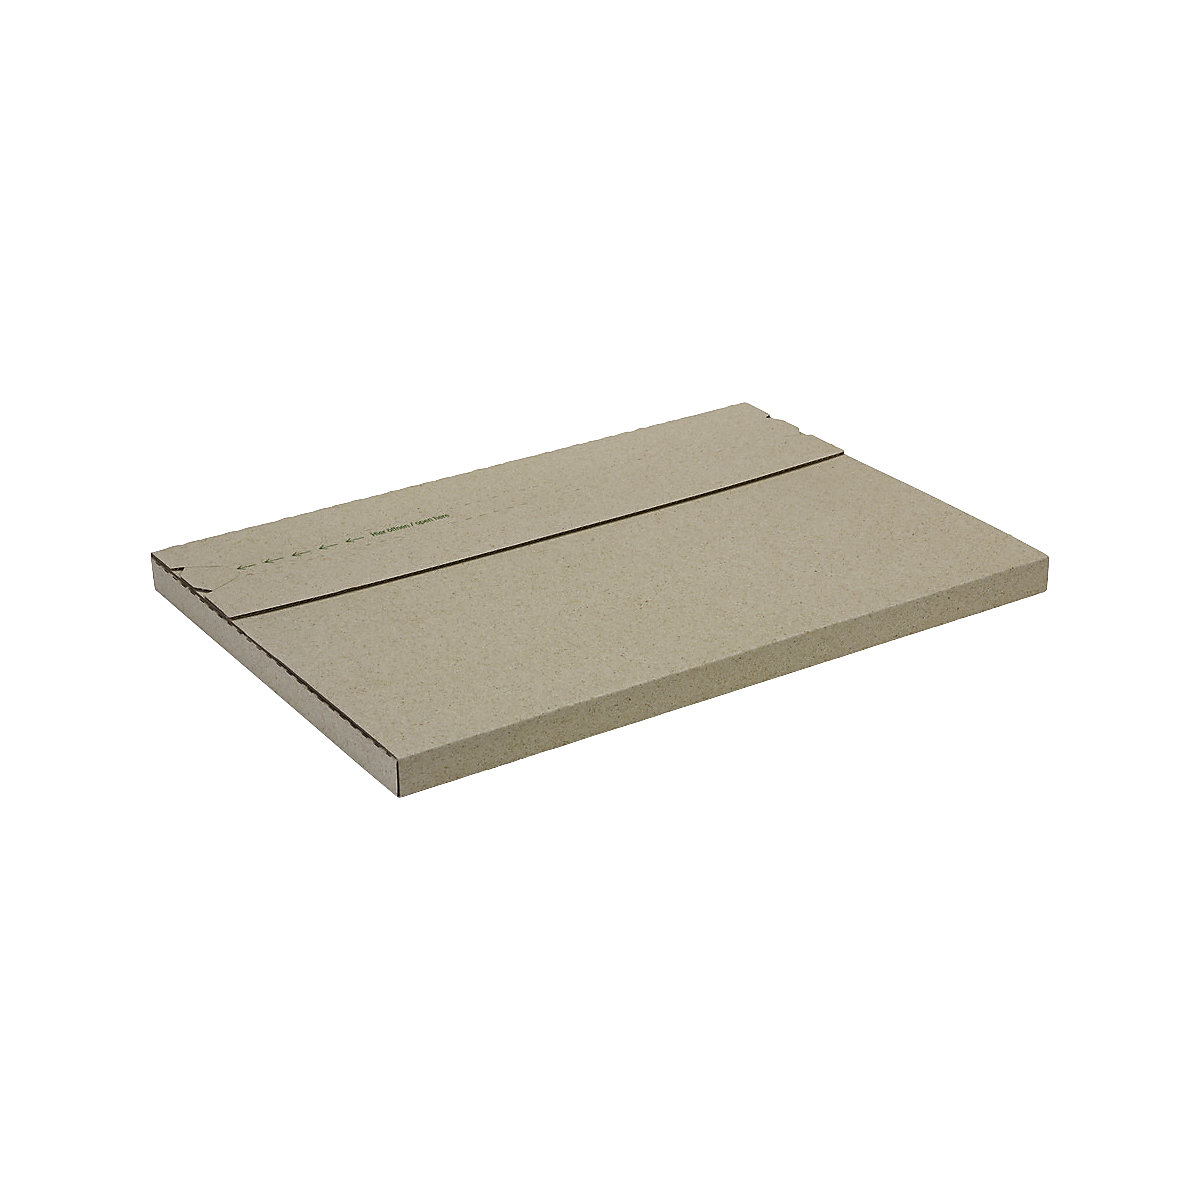 Graspapier-Flachpack terra, selbstklebend, Innen-LxBxH 349 x 246 x 15 mm, ab 20 Stk-1